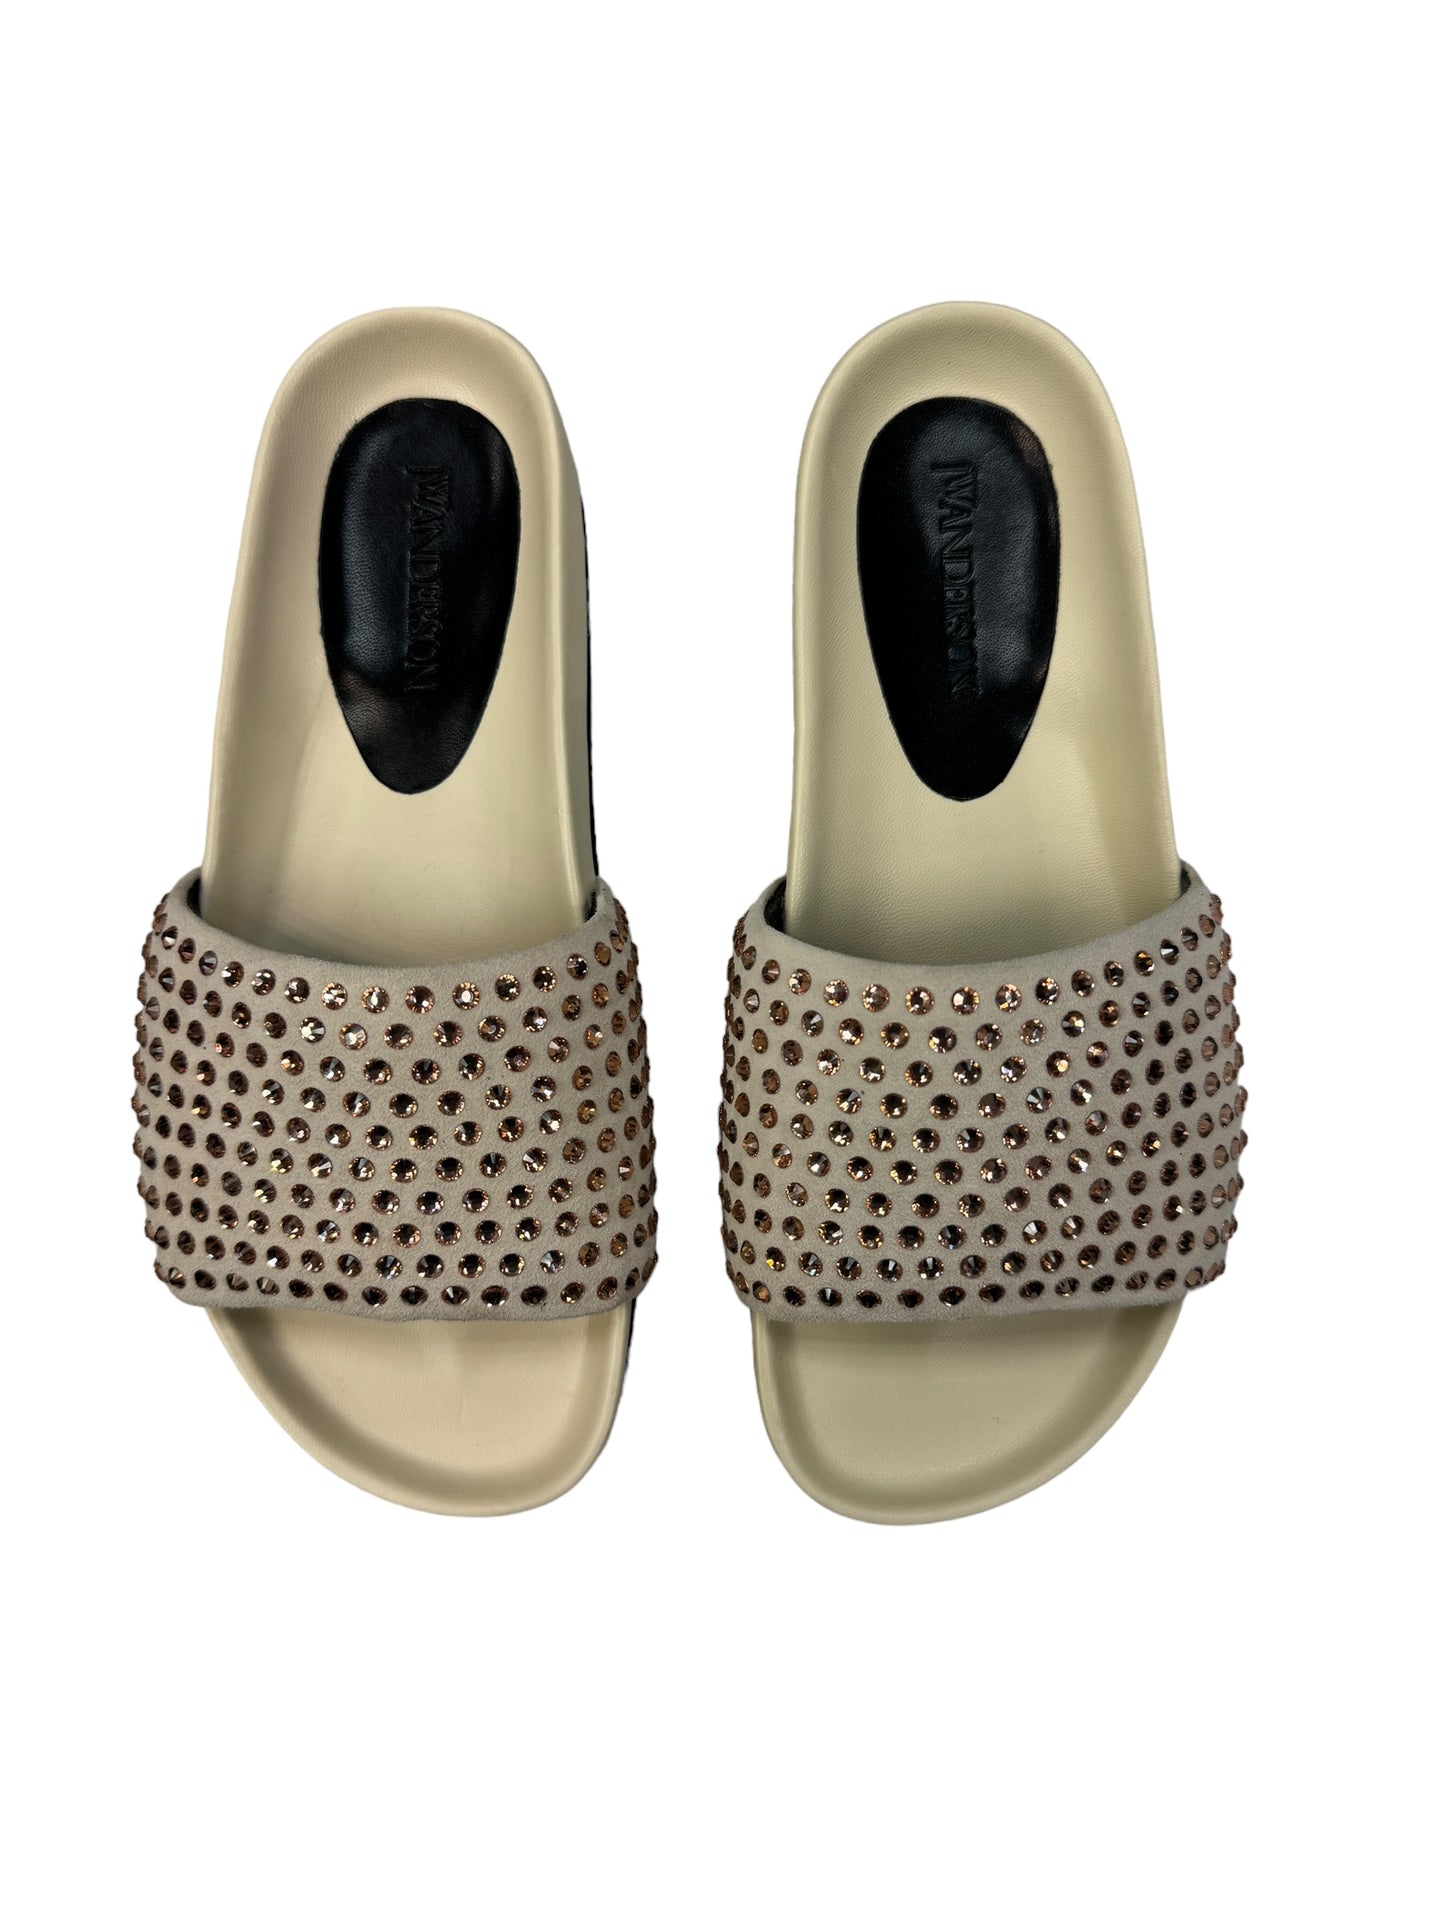 Sandals Designer By Cma  Size: 7.5